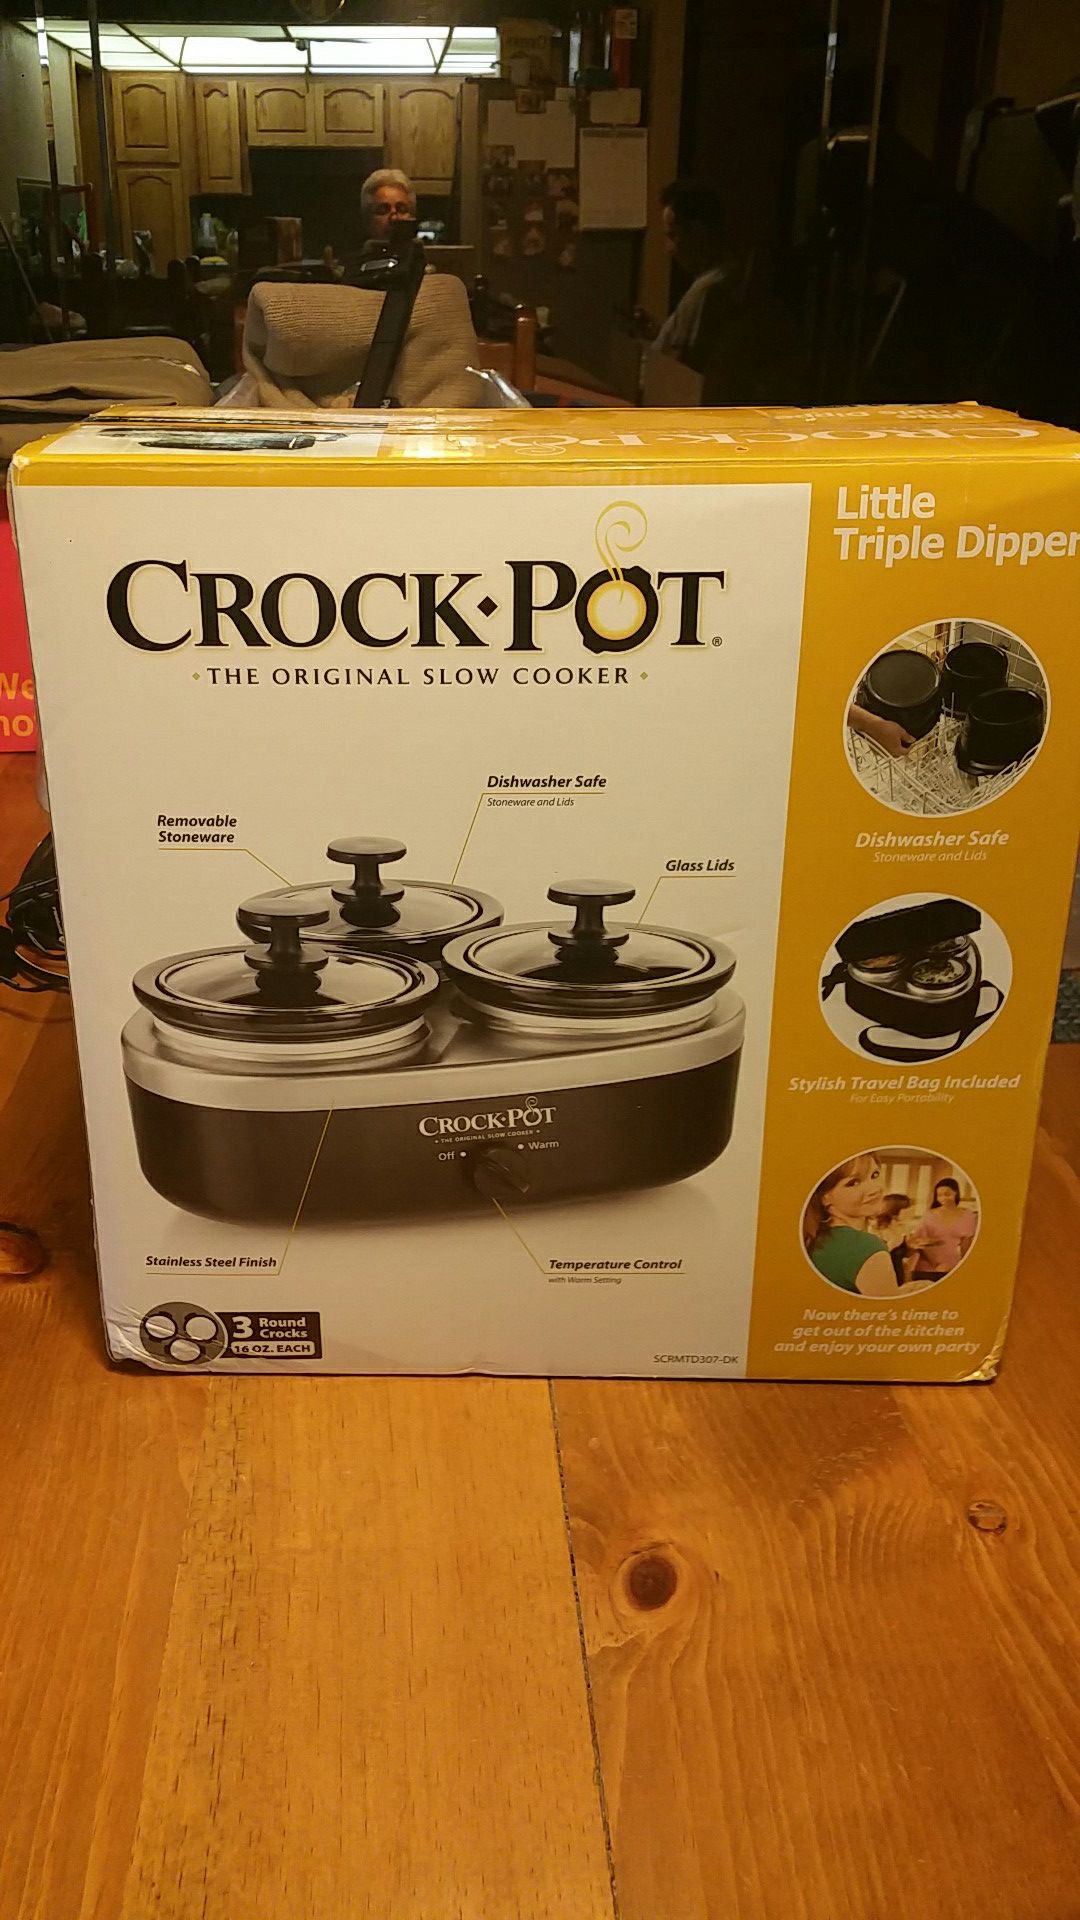 Crock pot little triple dipper good price!!